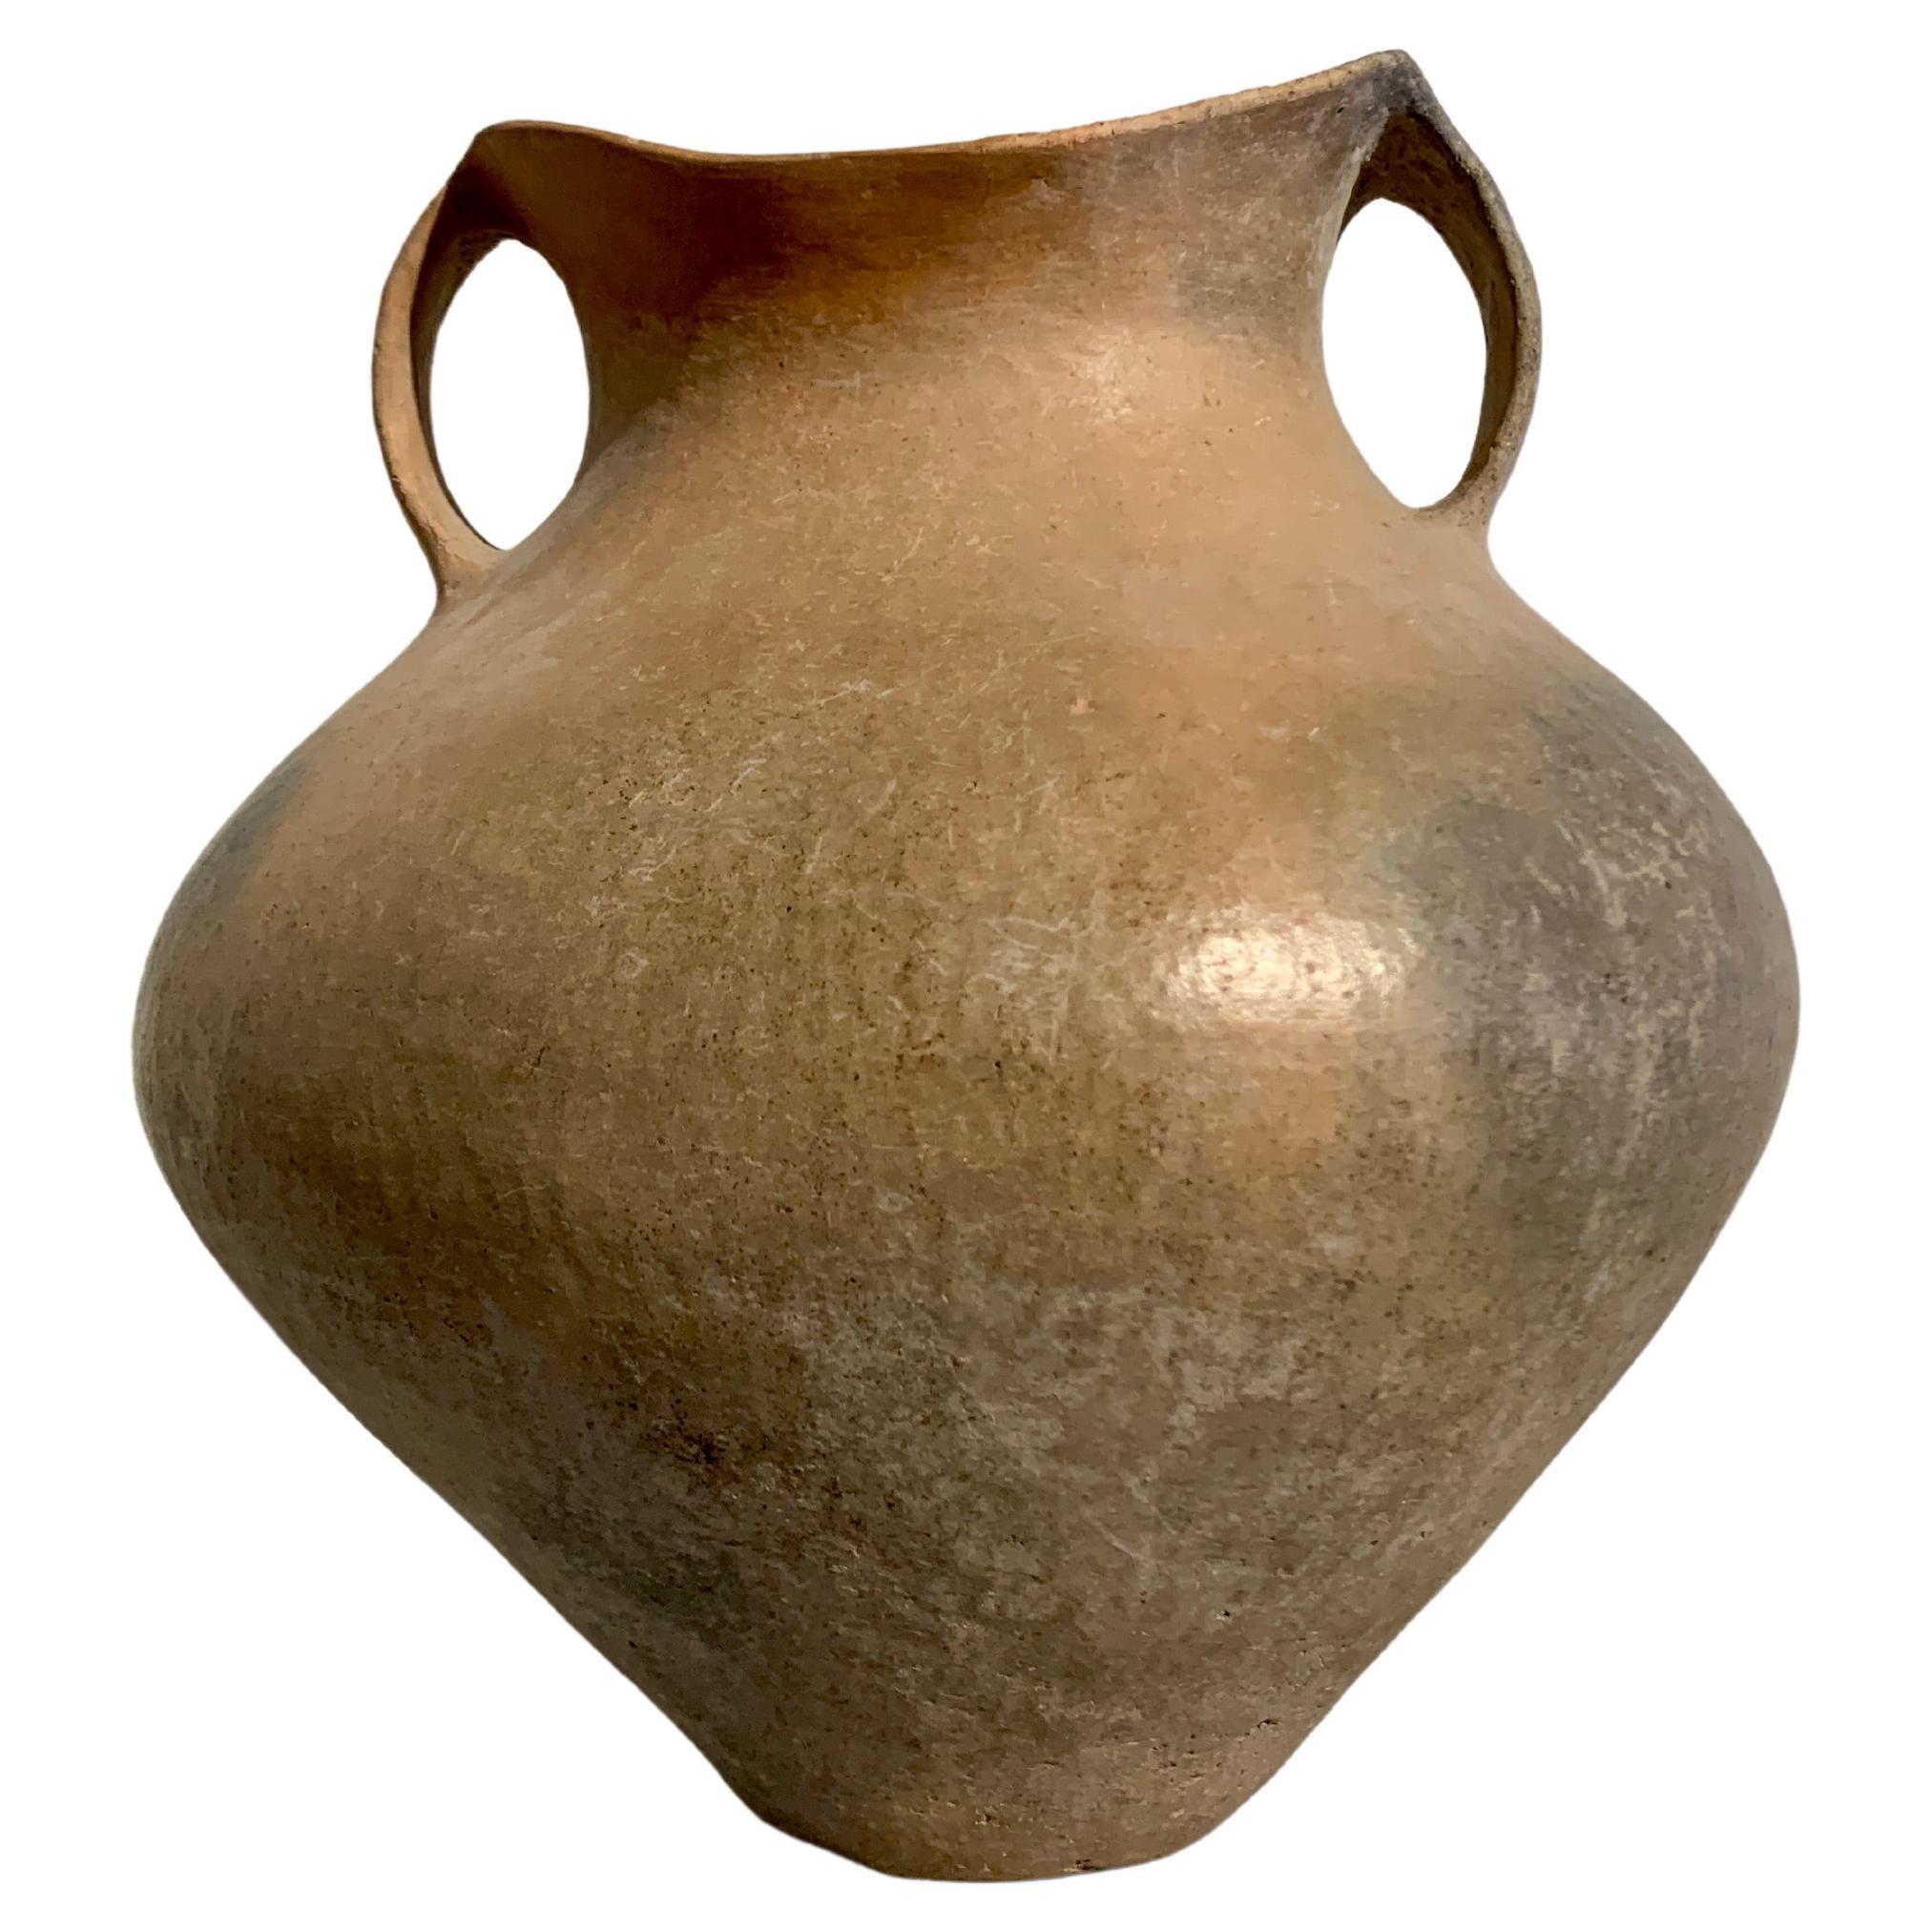 Chinese Siwa Culture Burnished Pottery Jar, 1500 - 1100 BC, China 